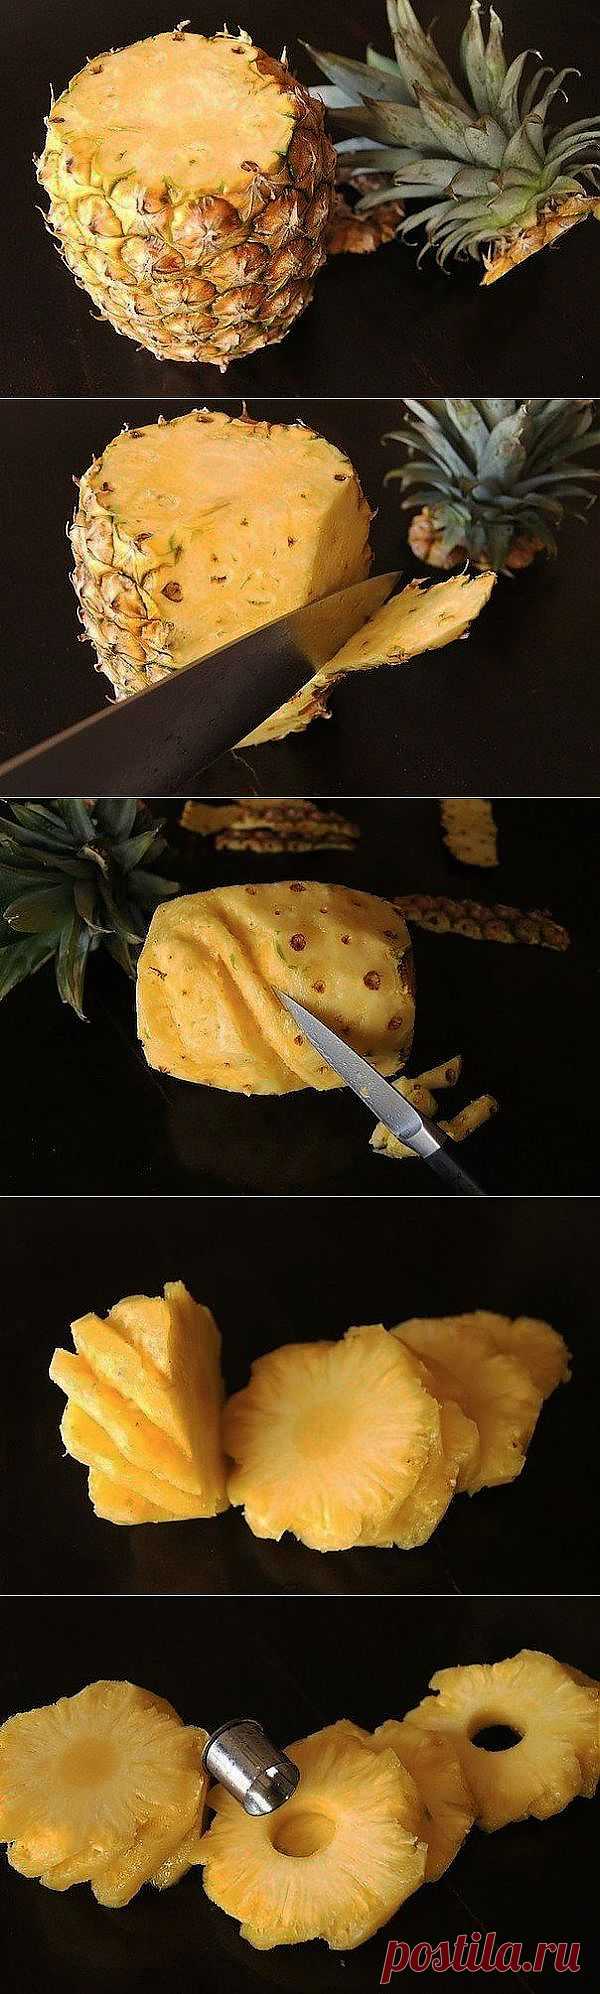 разделка ананаса для стола красиво